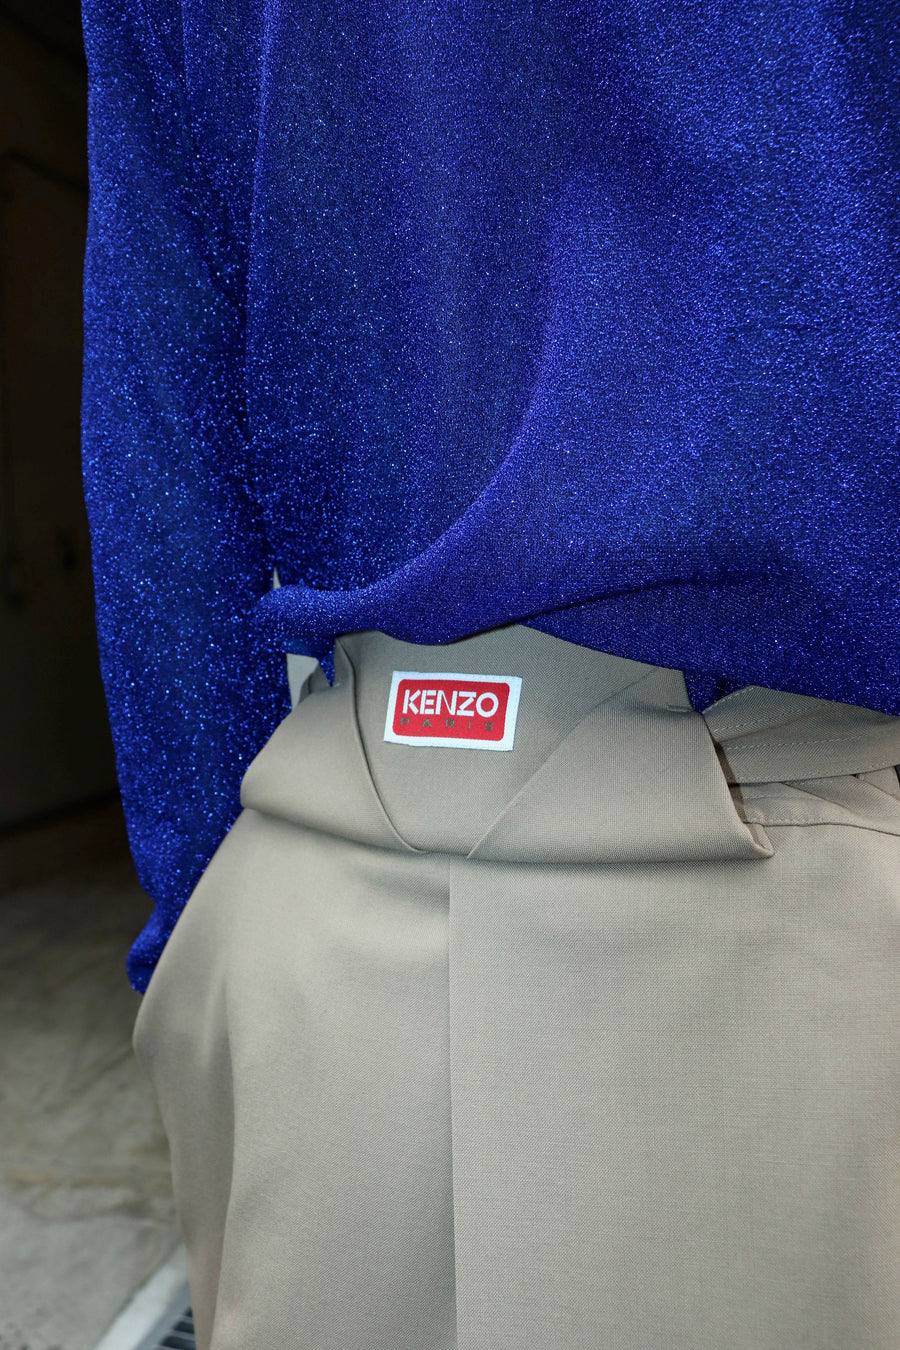 KENZO Kendo trousers, blue